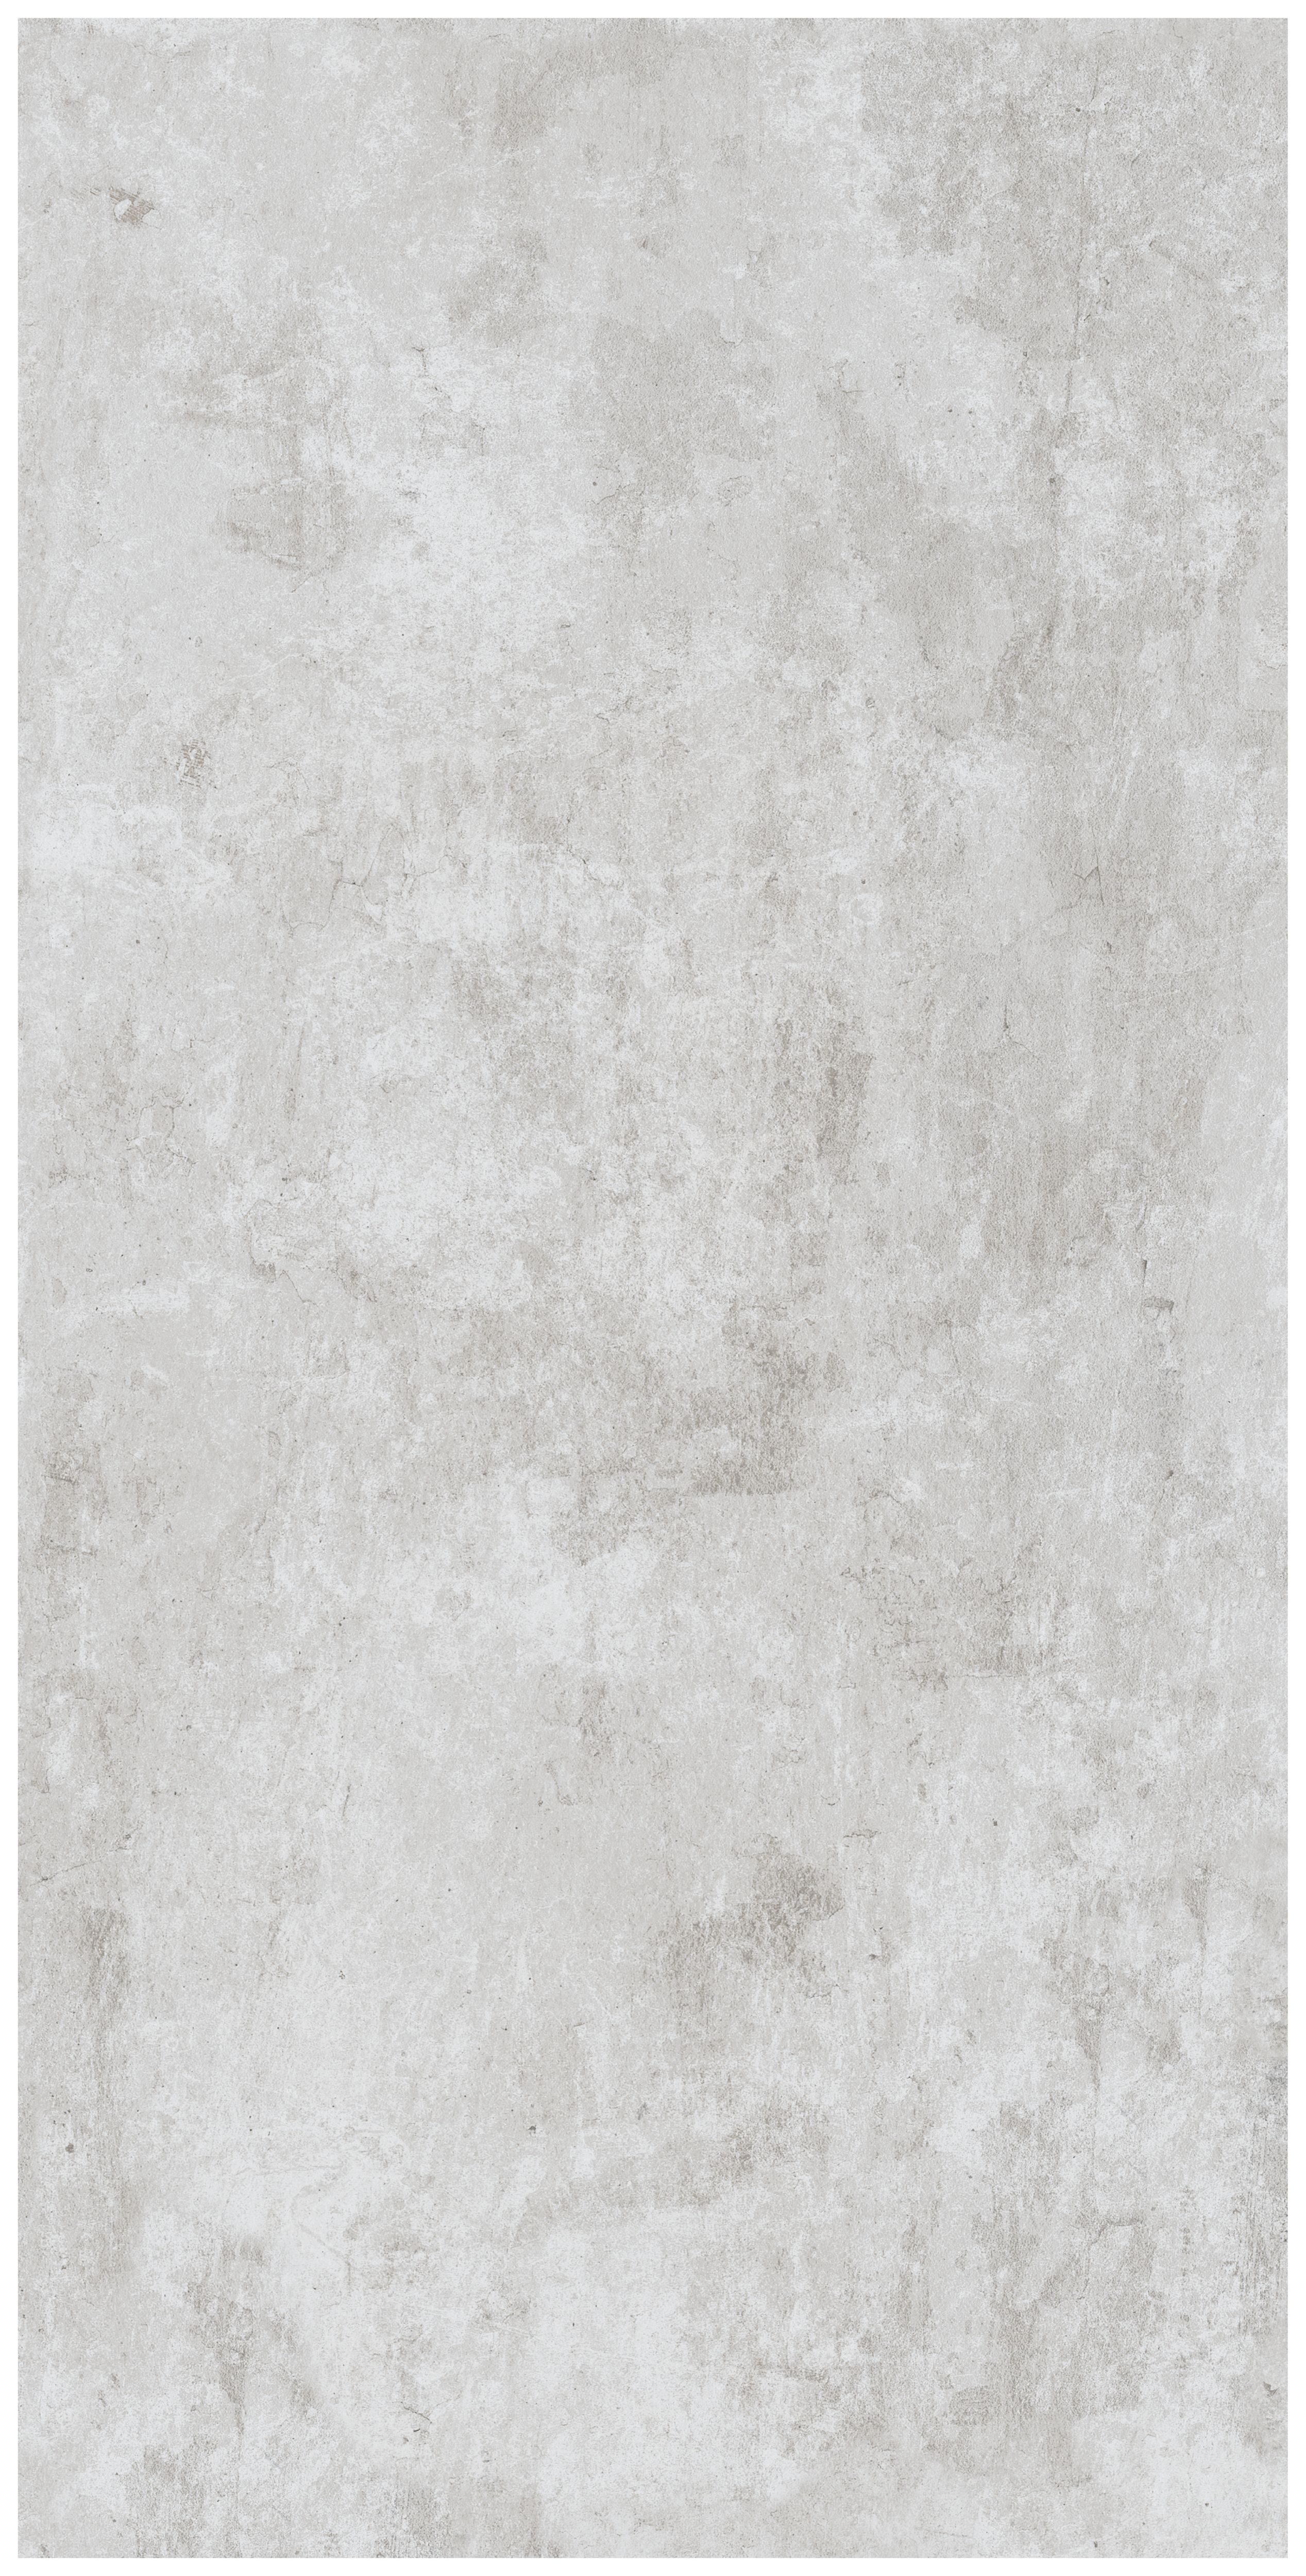 Wickes City Stone Grey Ceramic Wall & Floor Tile - 600 x 300mm - Sample